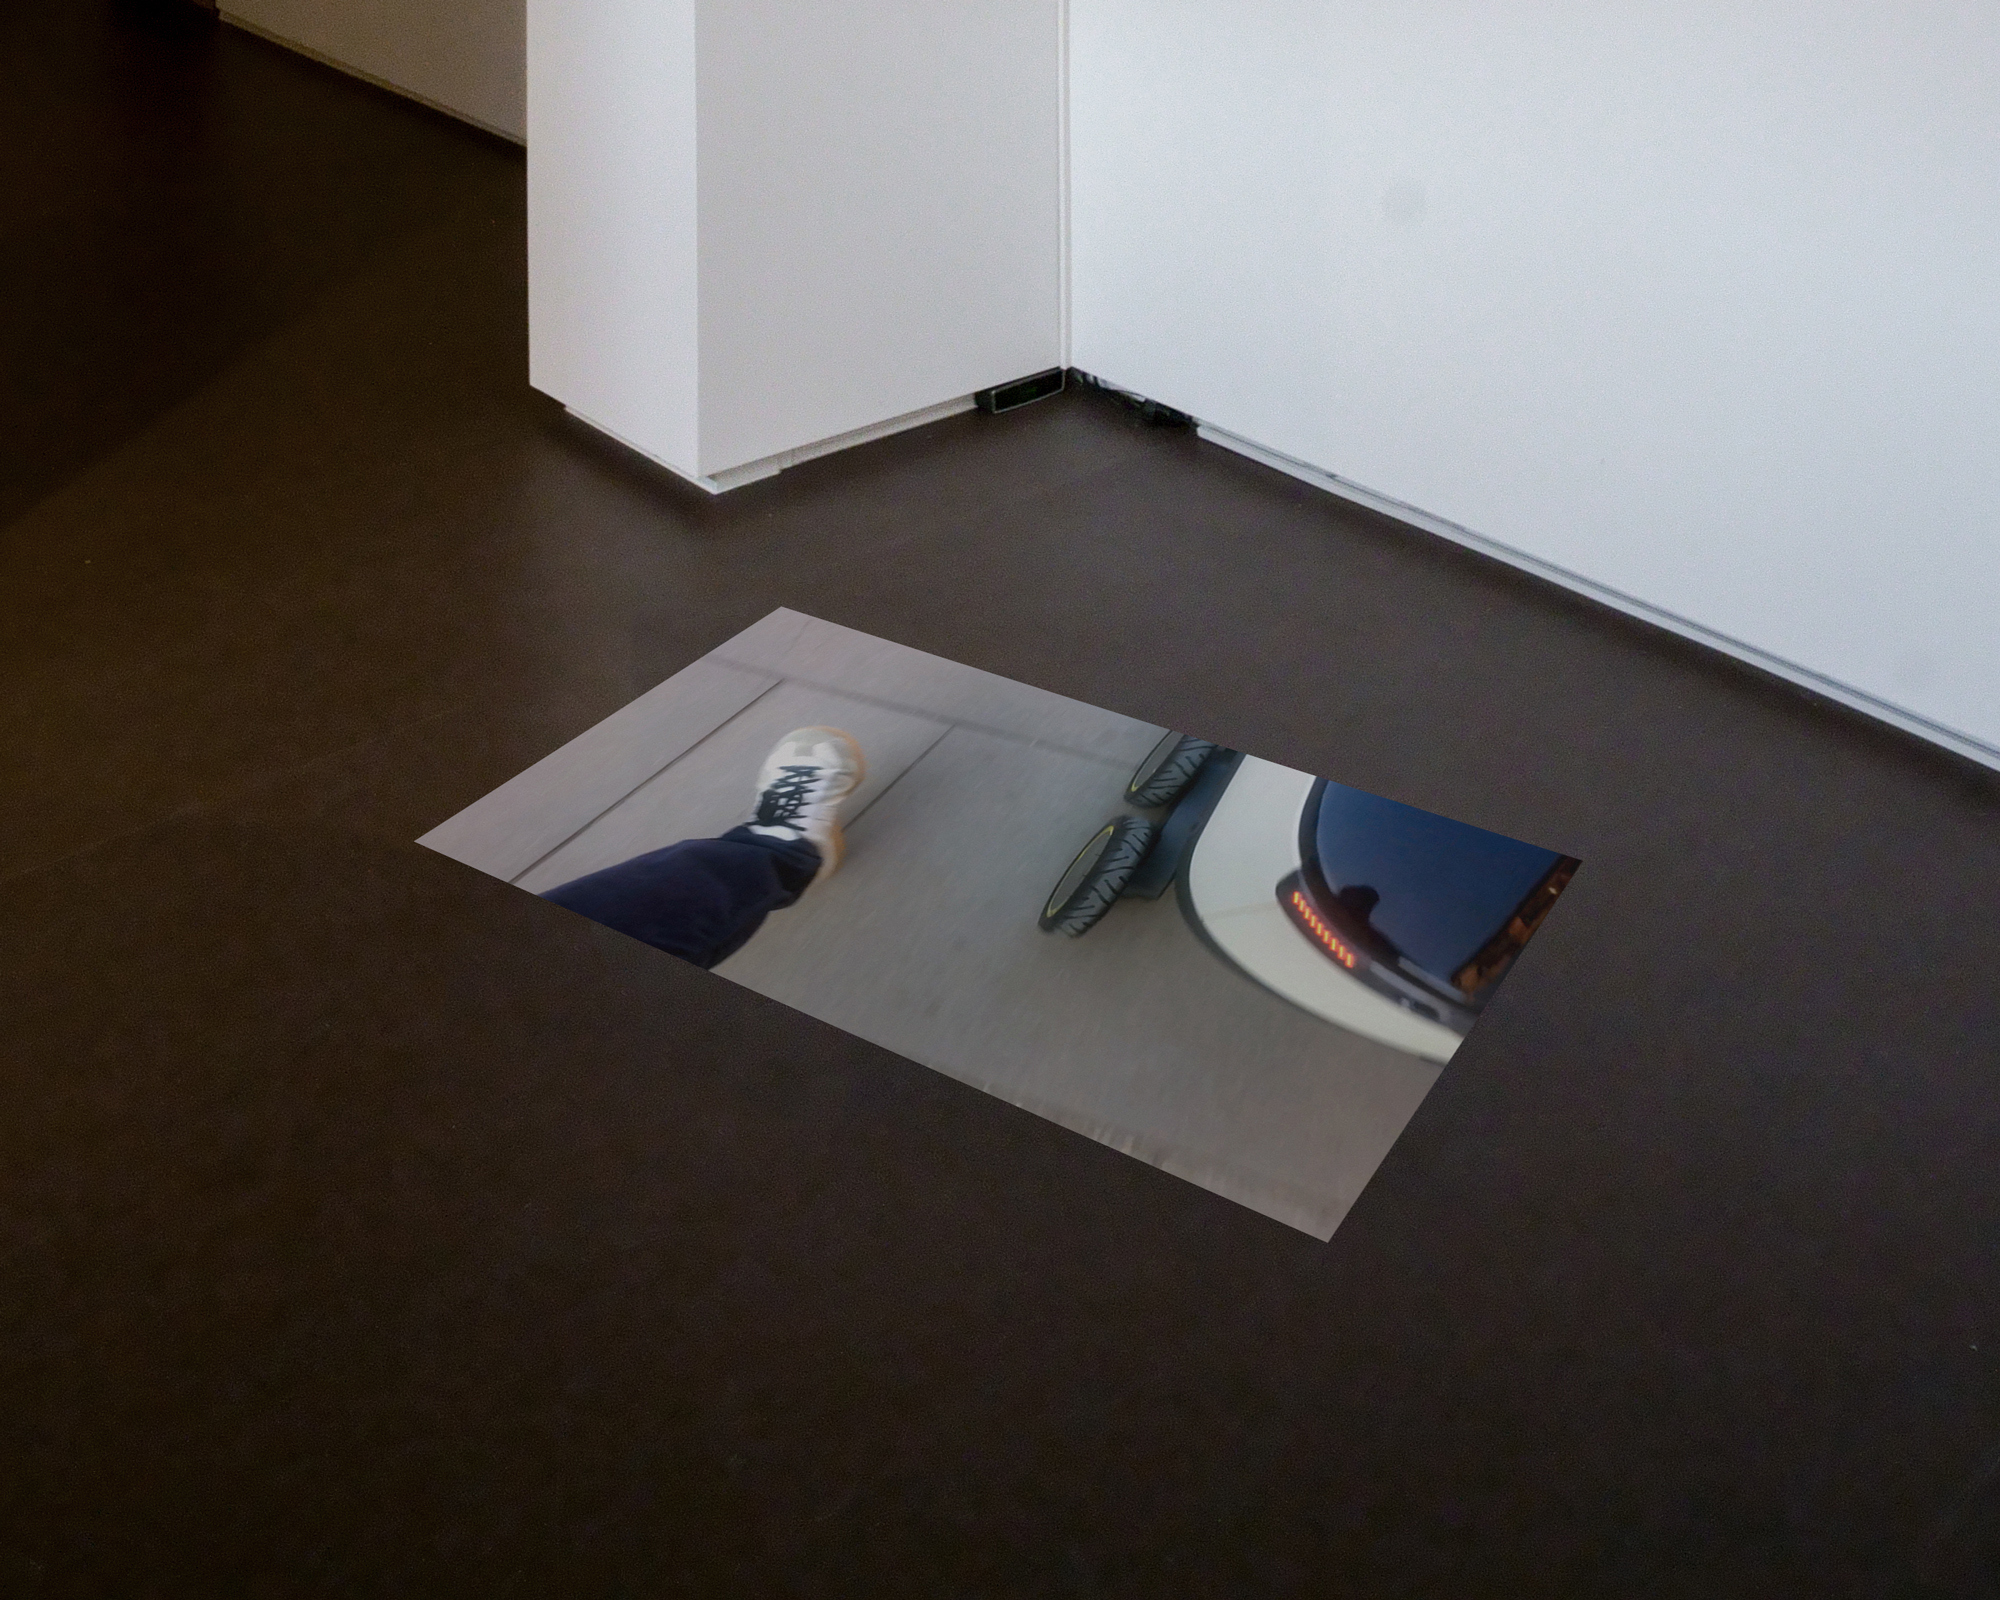 Jáno Möckel, Orbit, 2018/23, hd-videoinstallation, exhibition view